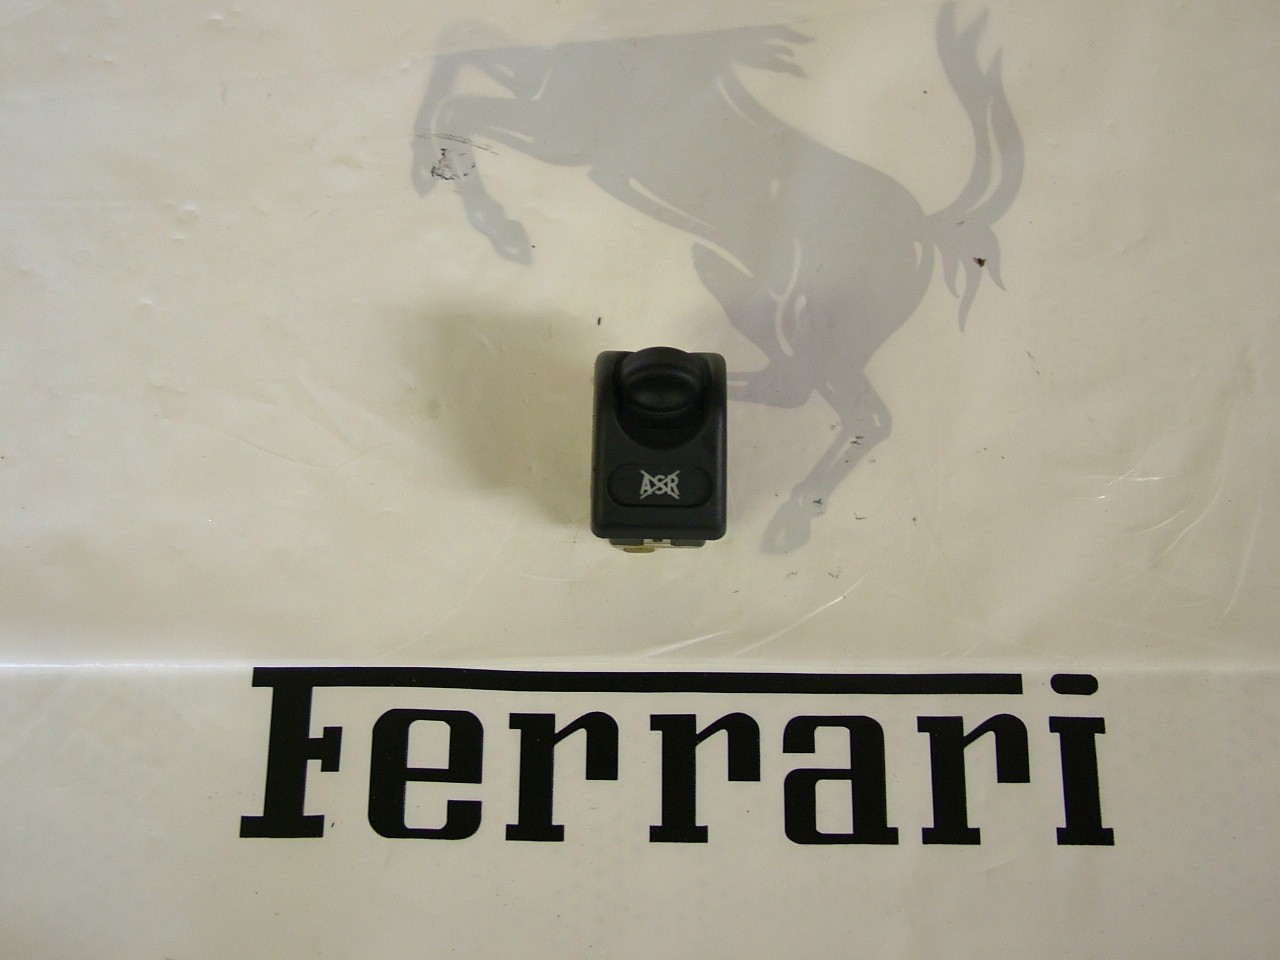 [180711] Ferrari 360 ASR Exclusion Control Switch (Used)